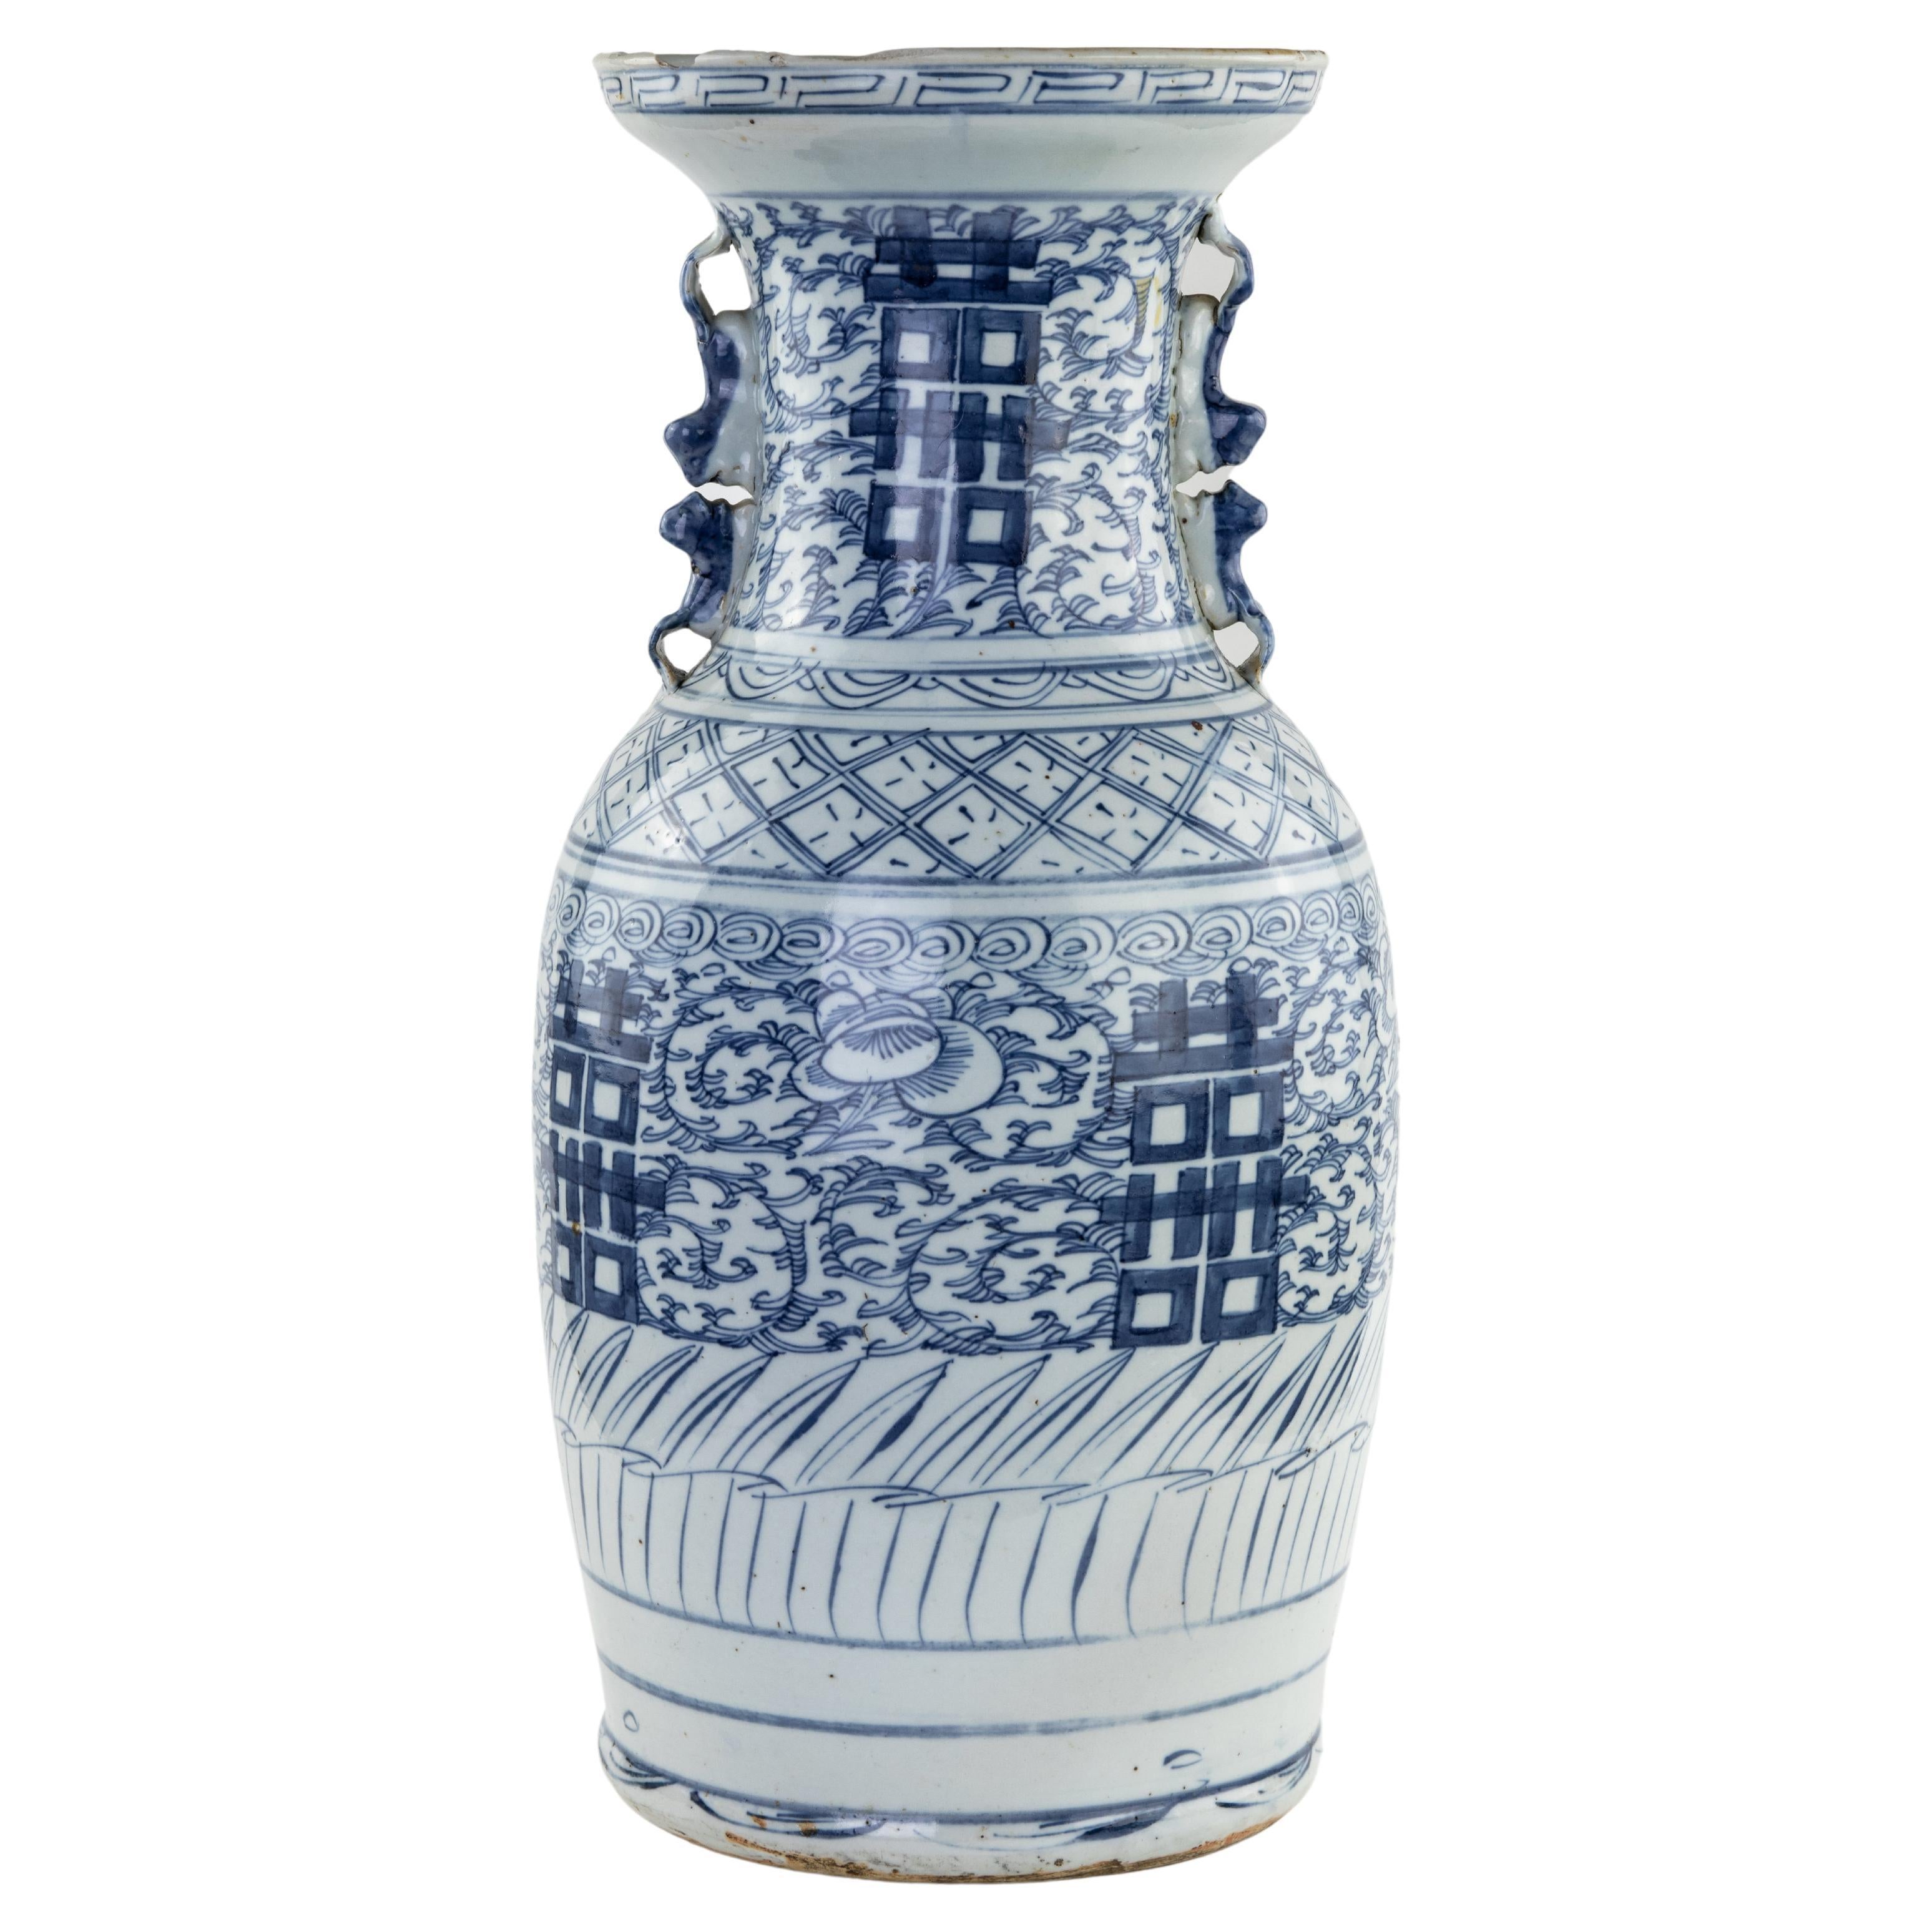 Vintage Porcelain Vase - China Early 20th Century